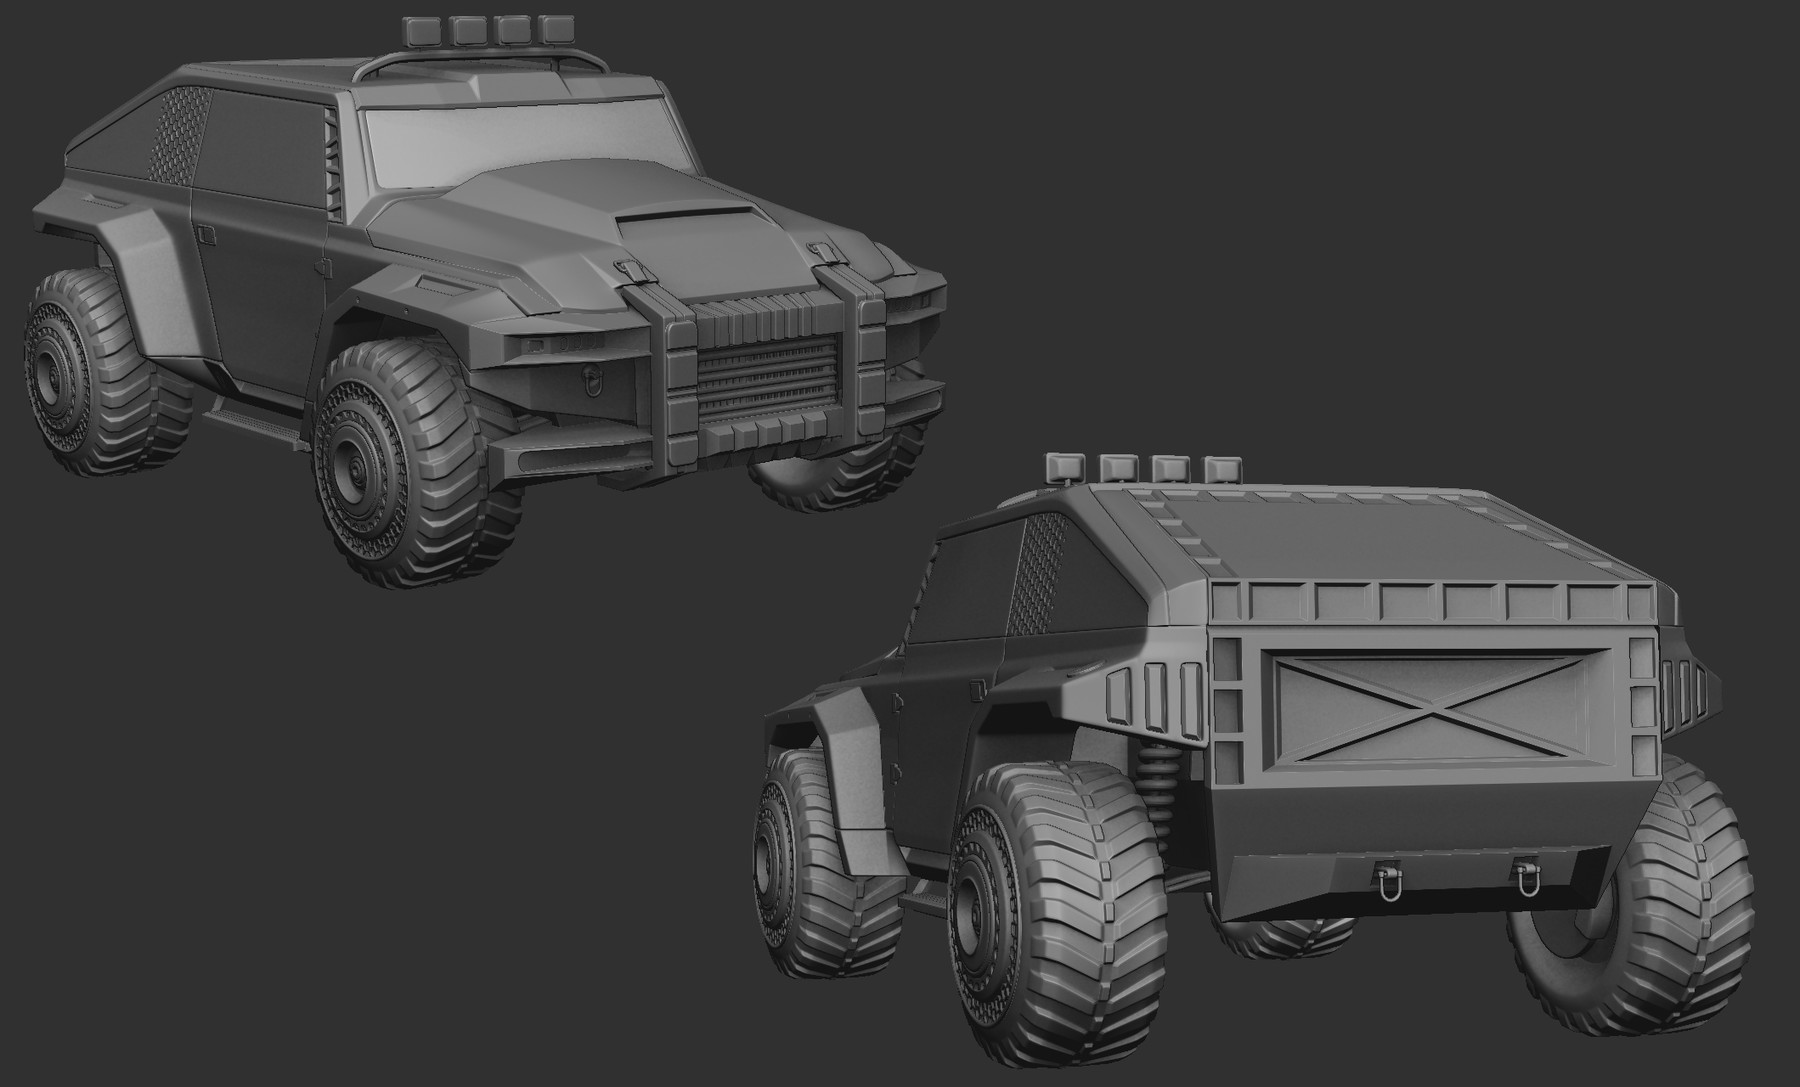 ArtStation - Sci-Fi Vehicle Concept | Resources